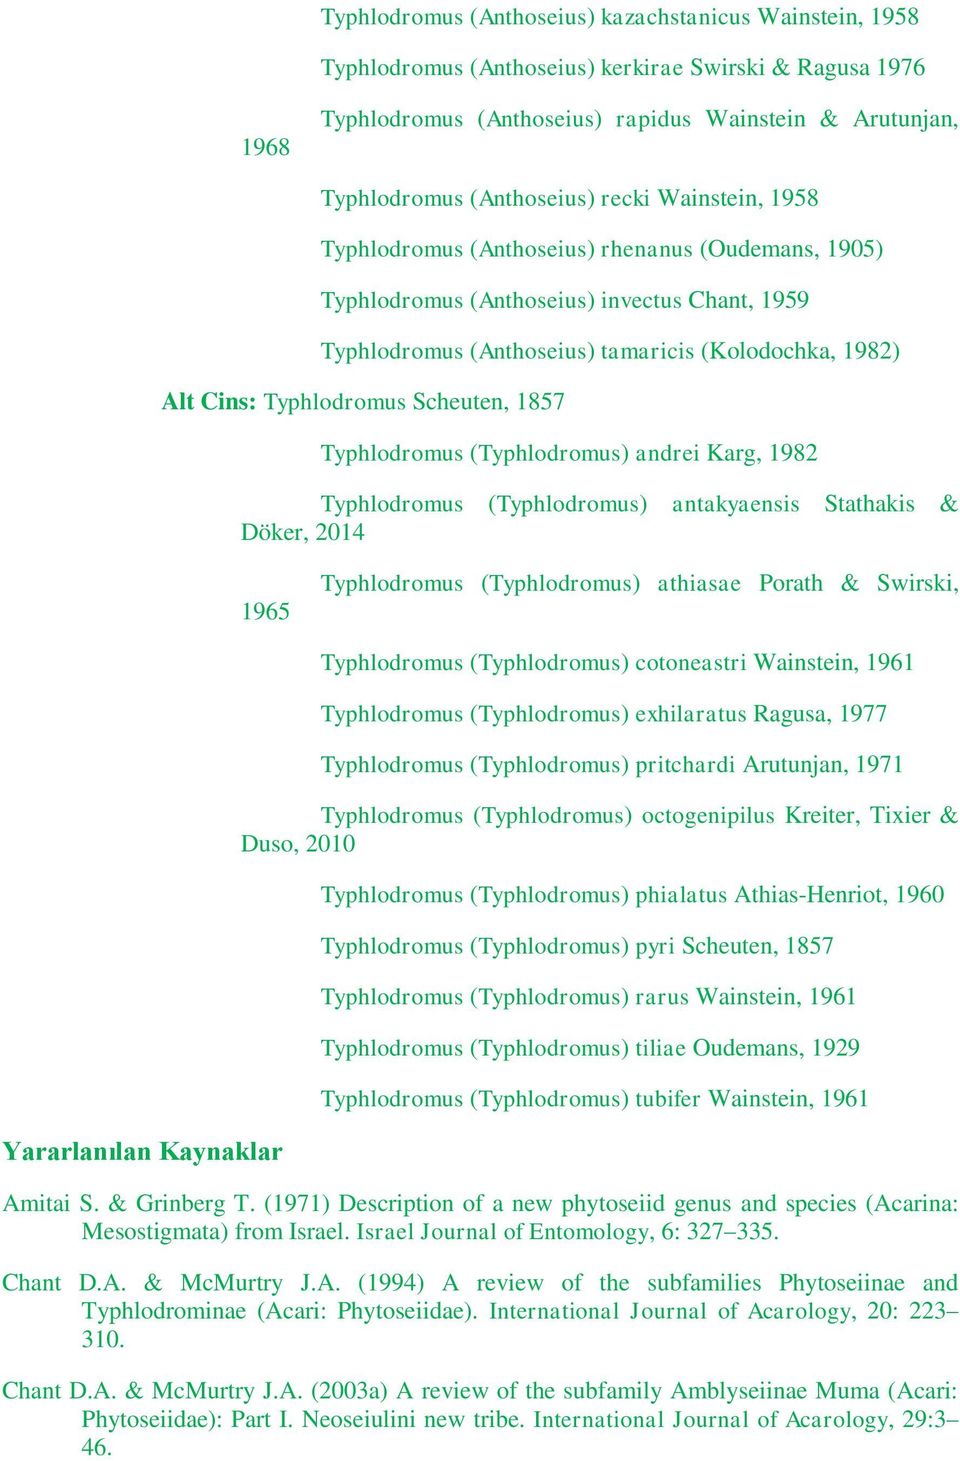 Typhlodromus Scheuten, 1857 Typhlodromus (Typhlodromus) andrei Karg, 1982 Typhlodromus (Typhlodromus) antakyaensis Stathakis & Döker, 2014 1965 Typhlodromus (Typhlodromus) athiasae Porath & Swirski,